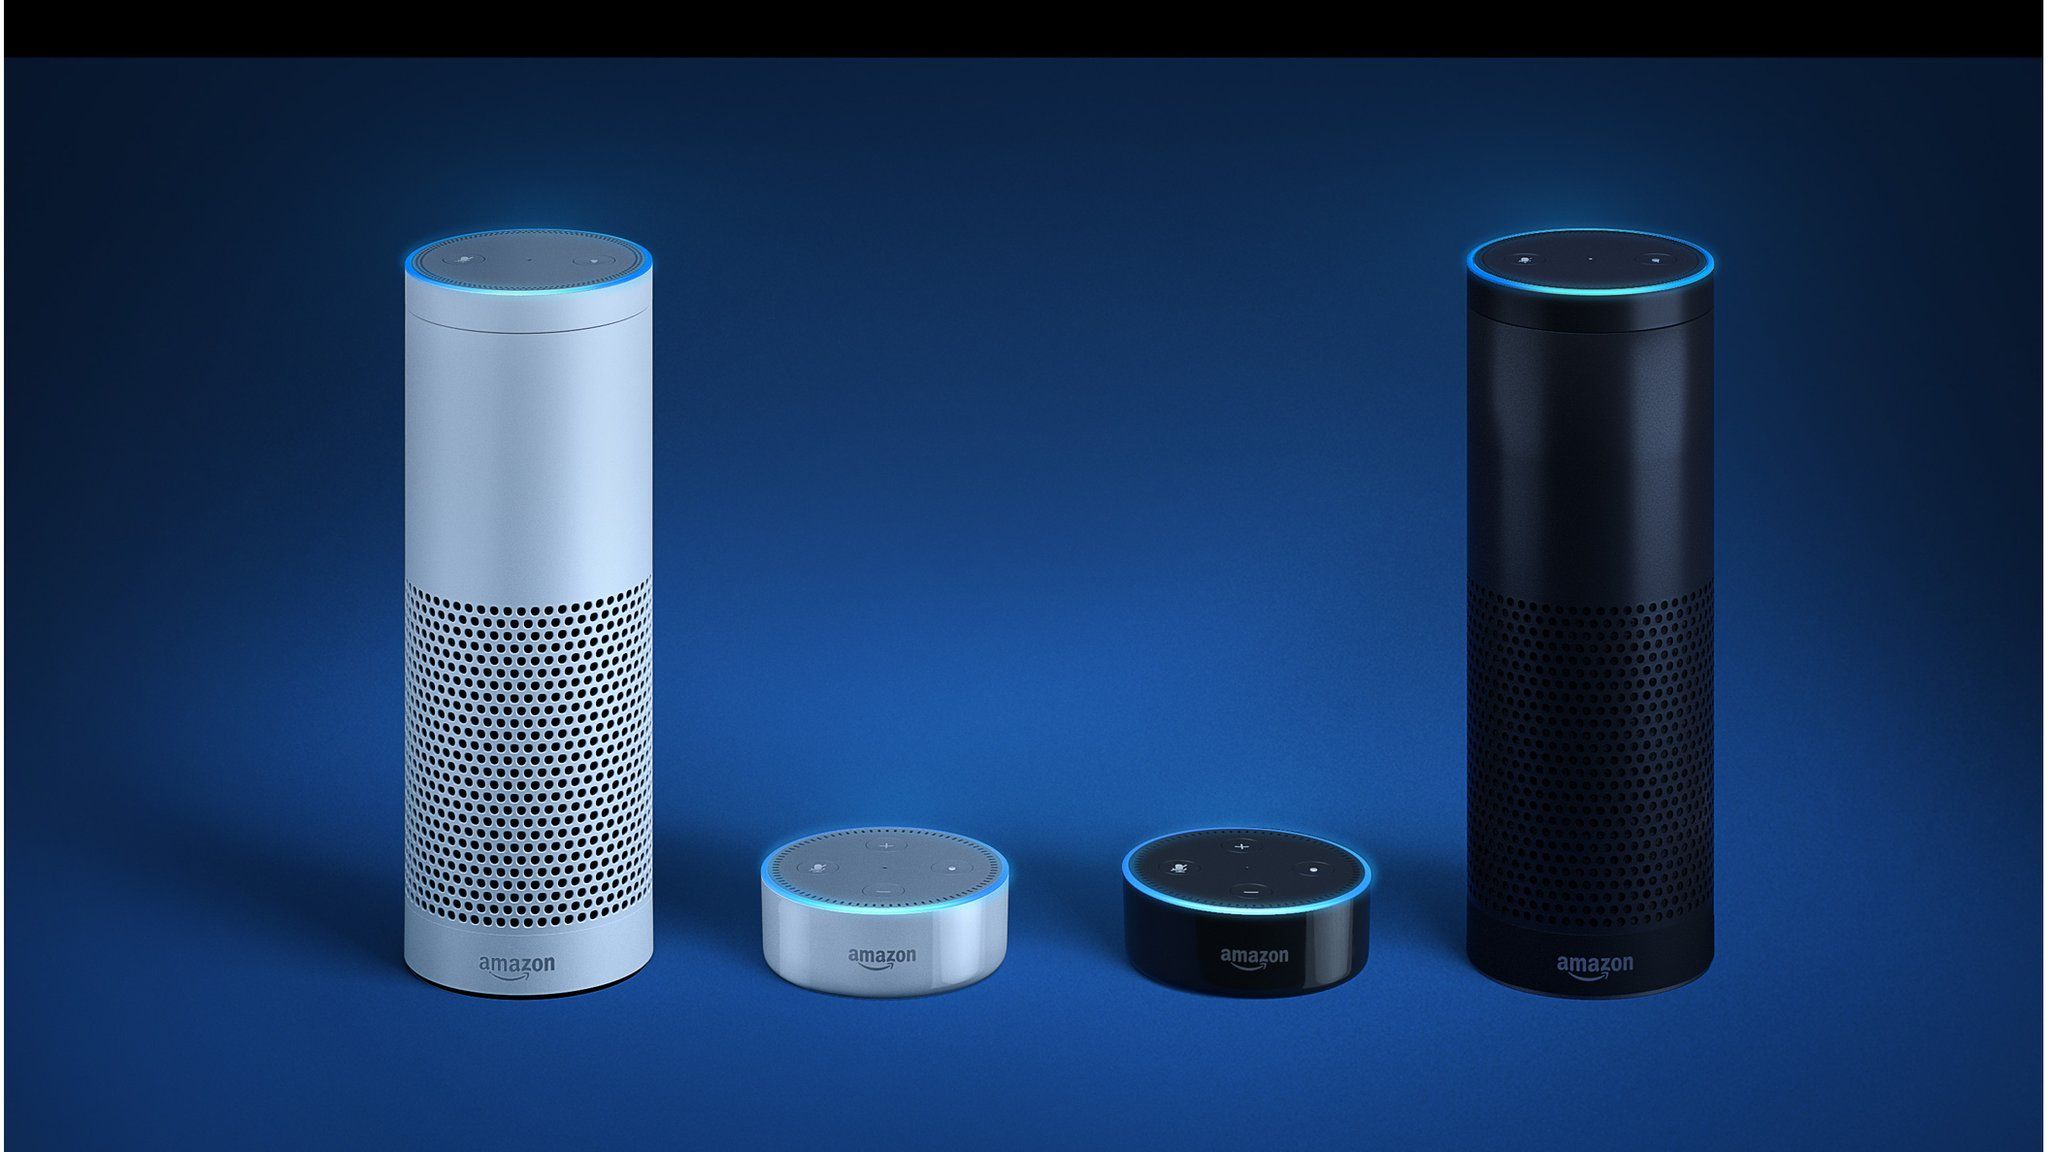 Amazon Alexa could snoop on conversations